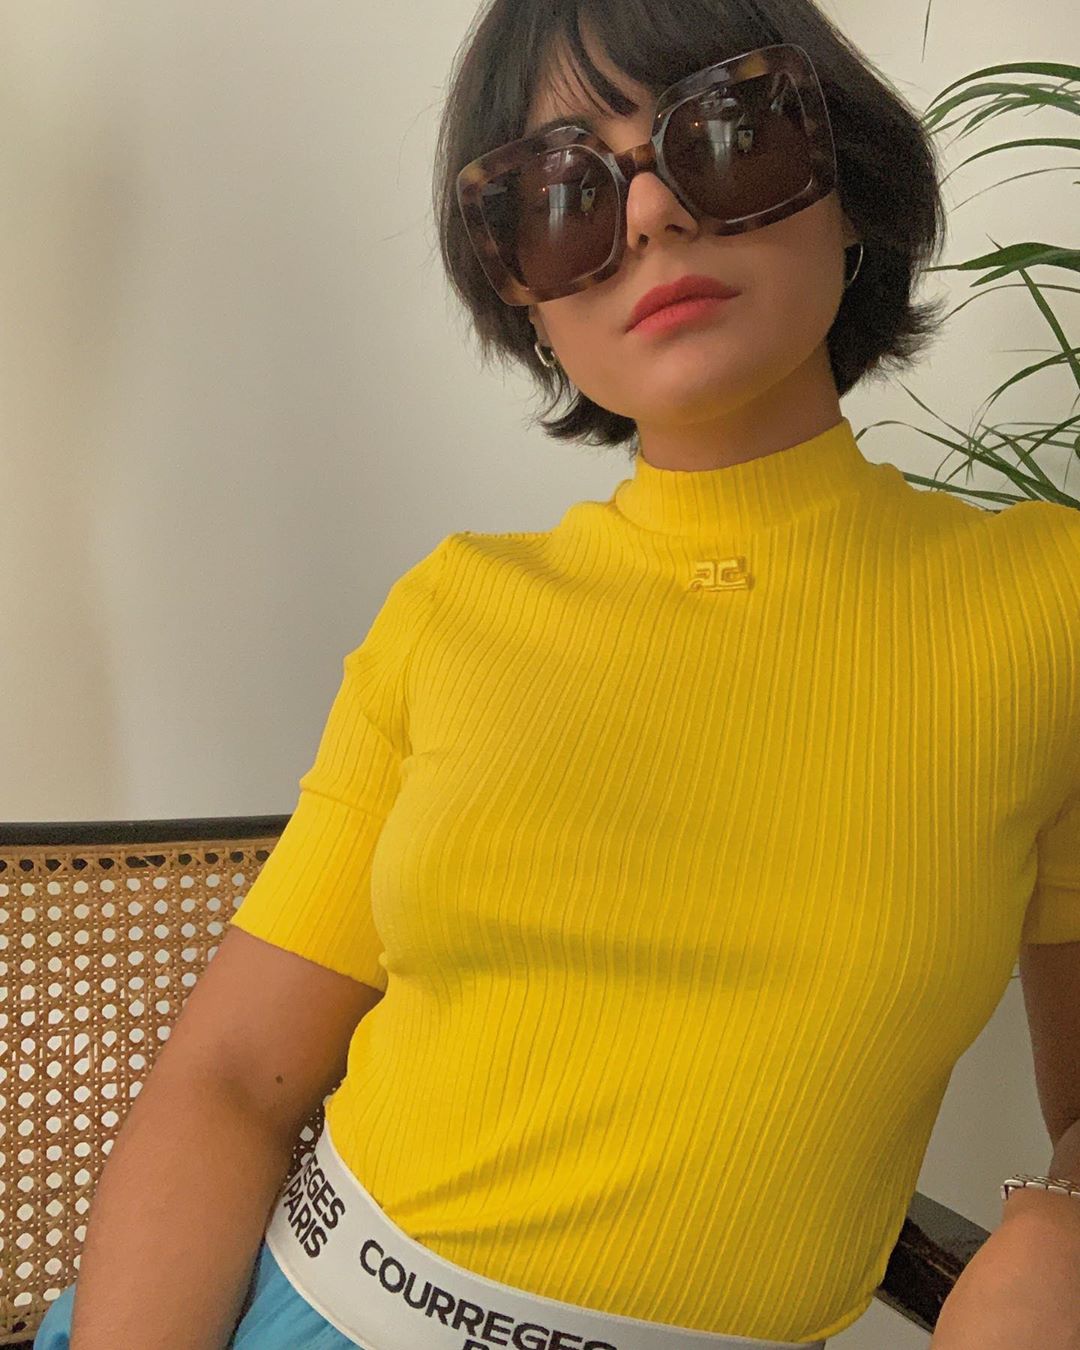 10 Pairs of Retro Inspired Oversized Sunglasses We Love — Maria Bernad Square Sunglasses